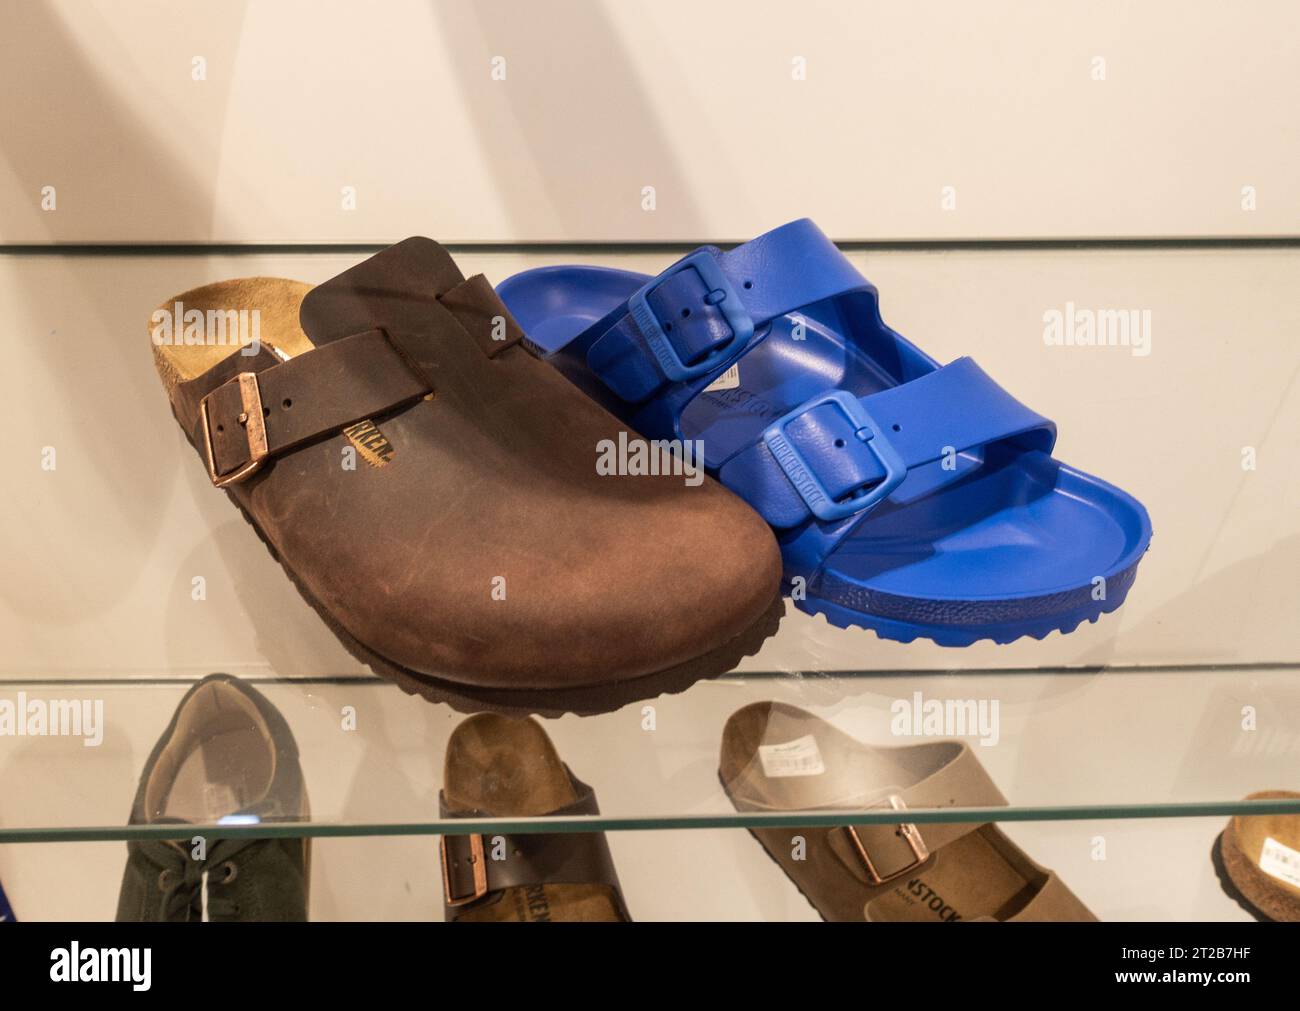 Birkenstock shoes, footwear, sandals, store display Stock Photo